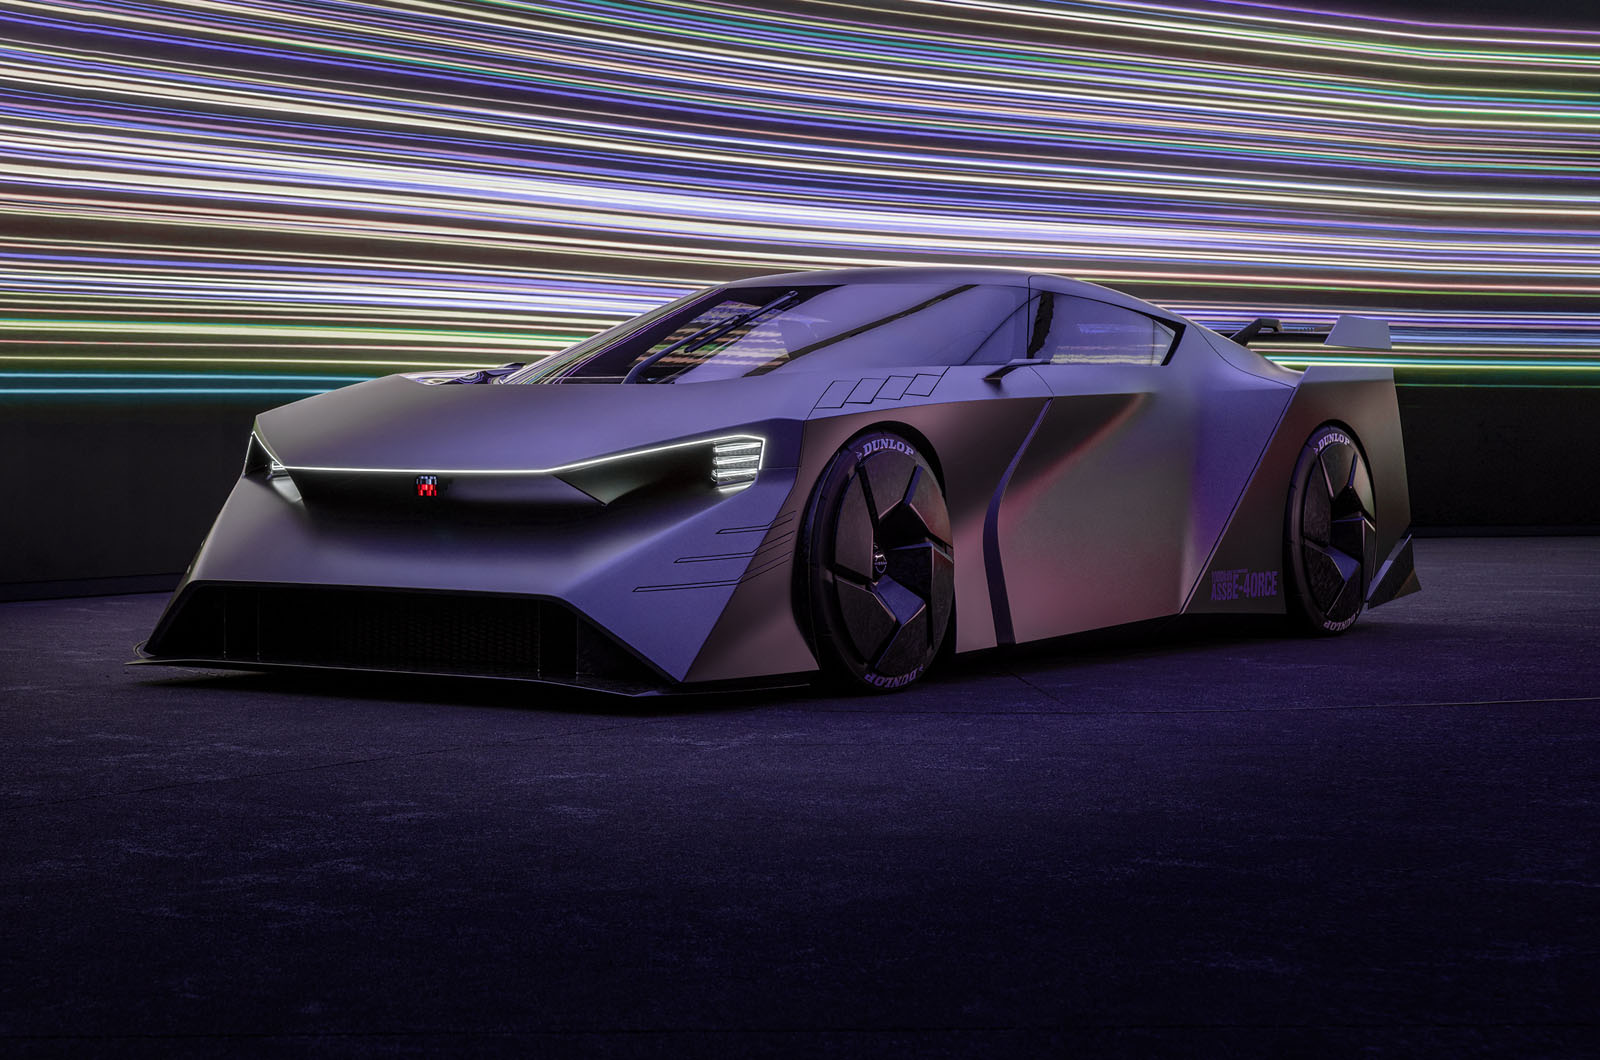 Nissan Skyline GT-R rendering the future generation 